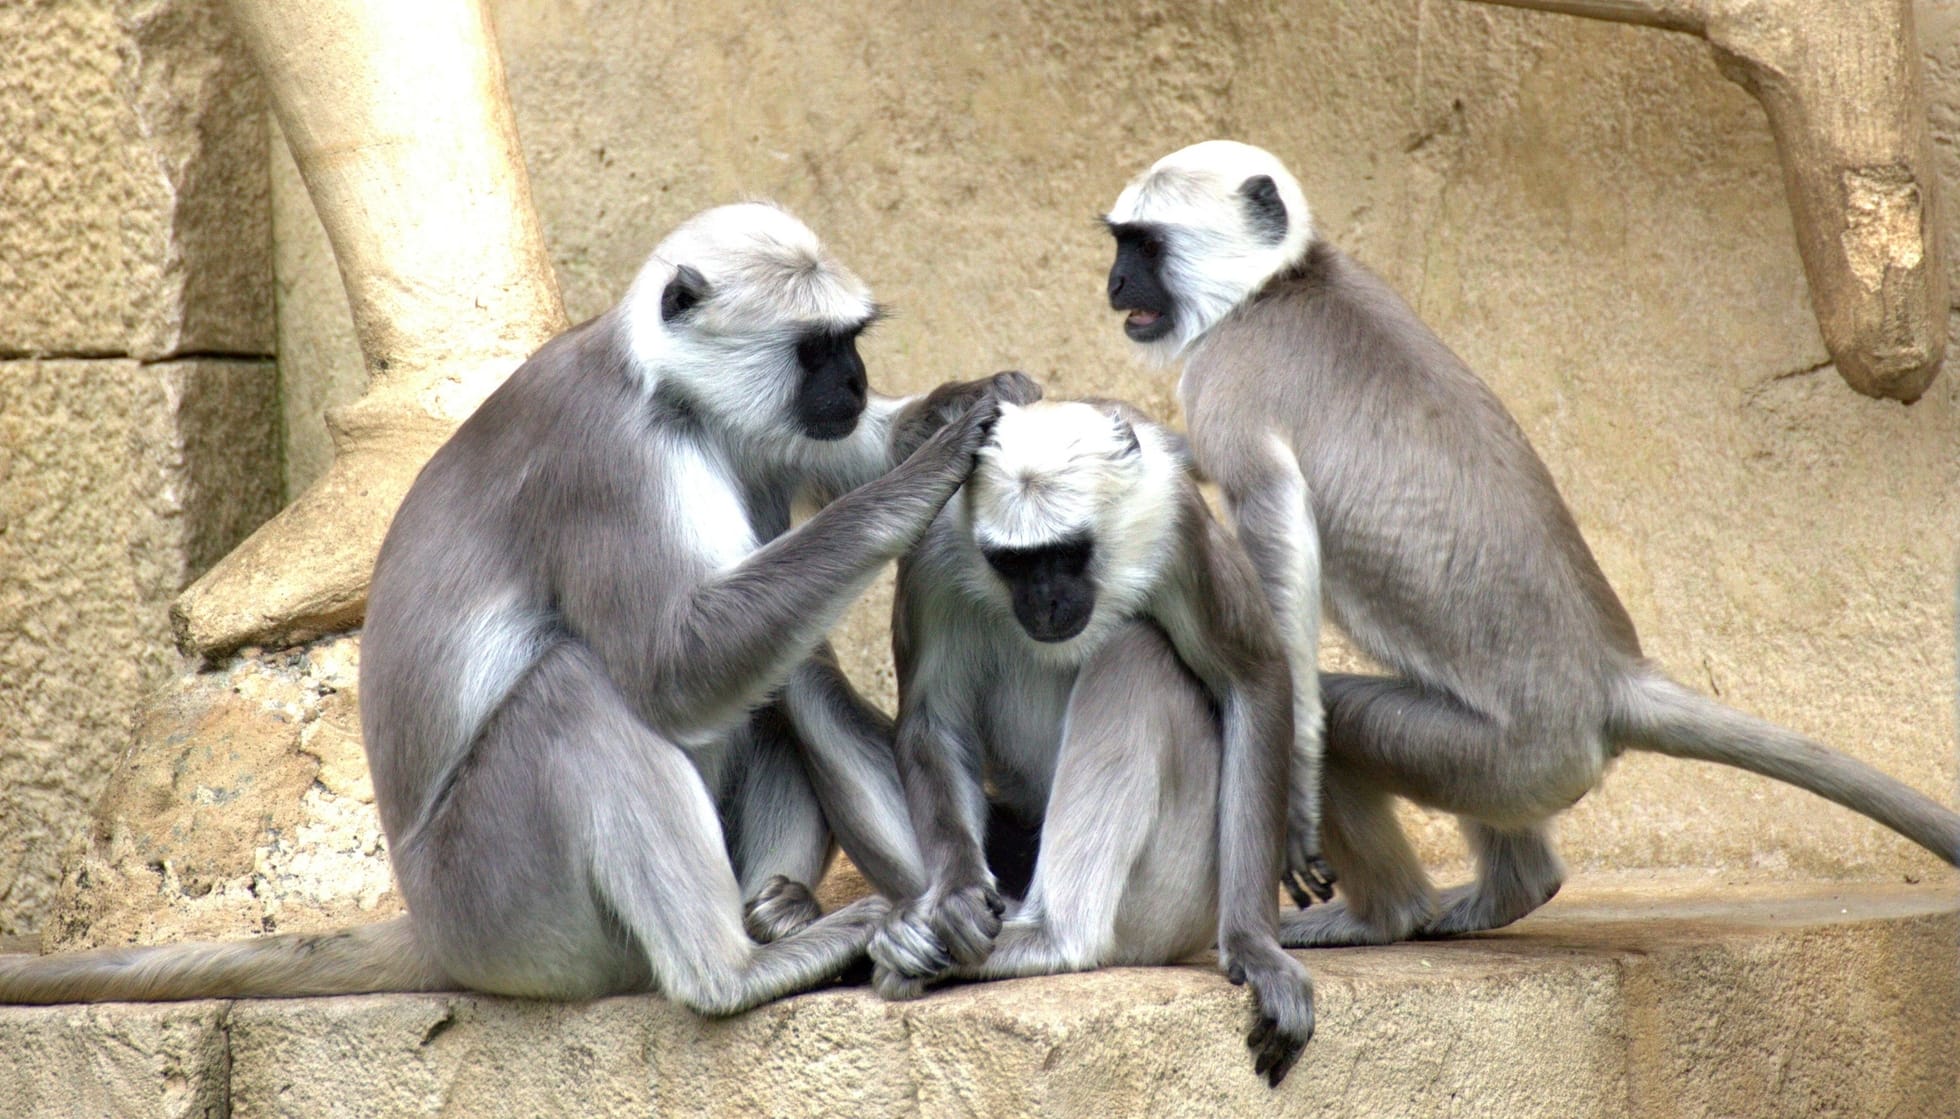 Three Old World Monkeys chilling 